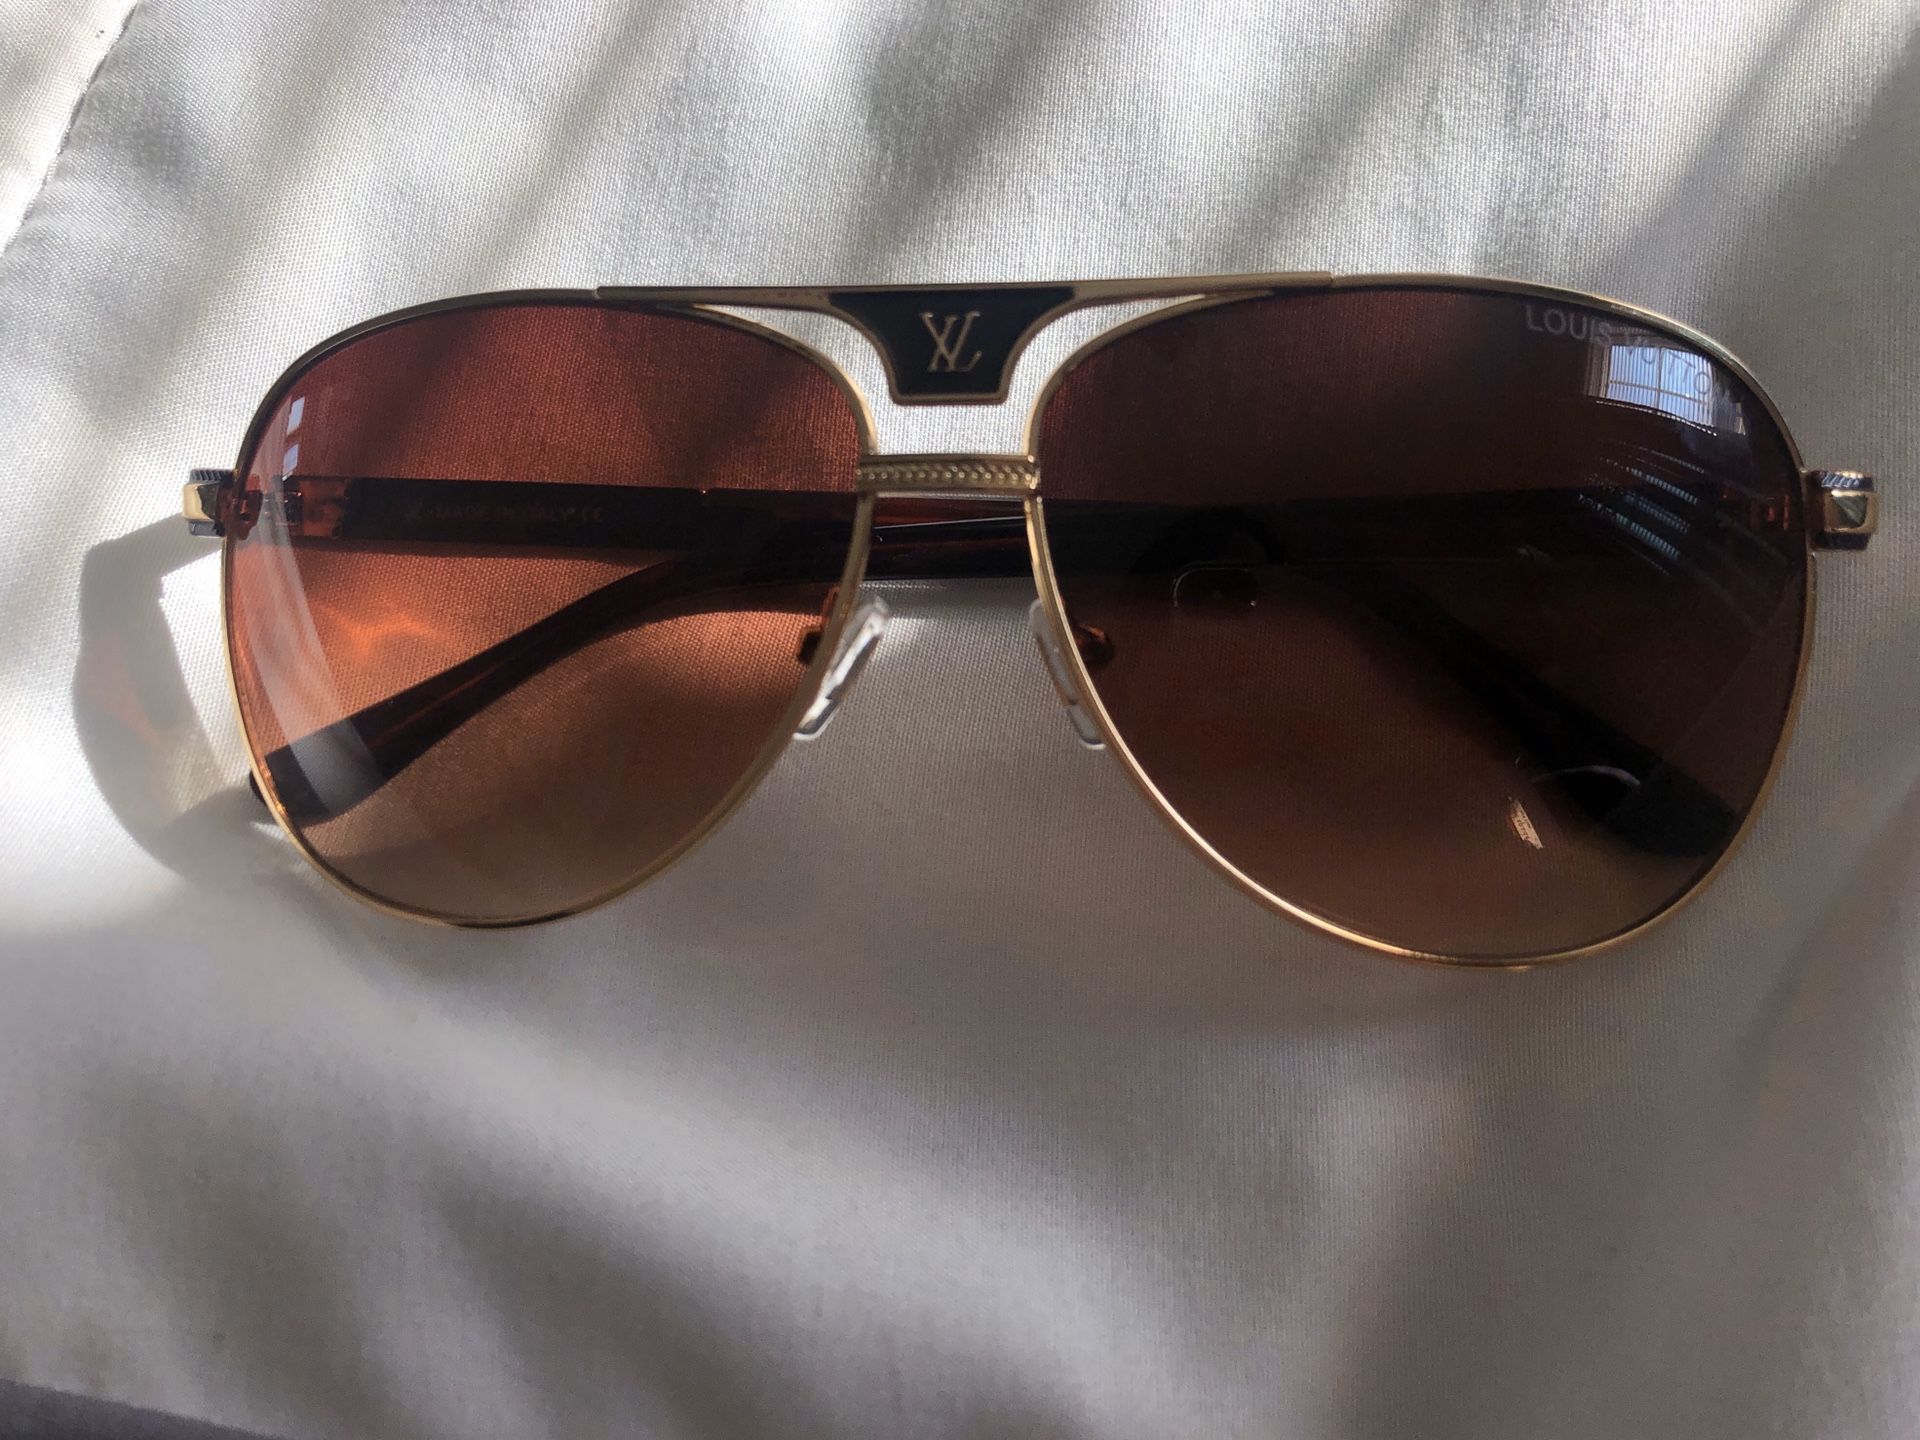 Louis vuitton sunglasses. Unisex